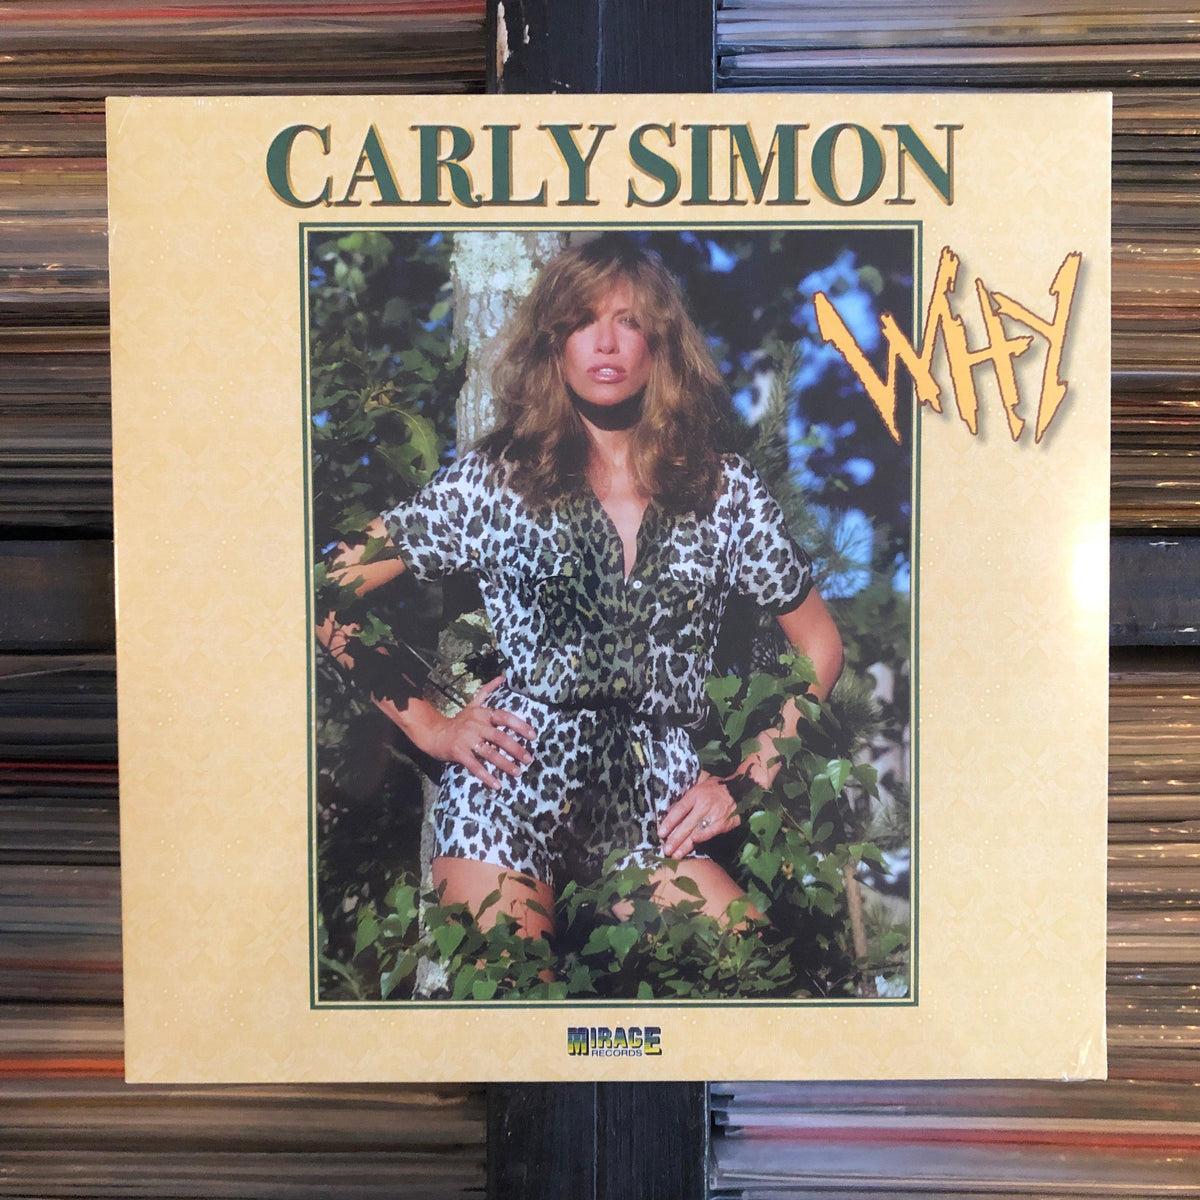 CARLY SIMON - WHY - 12